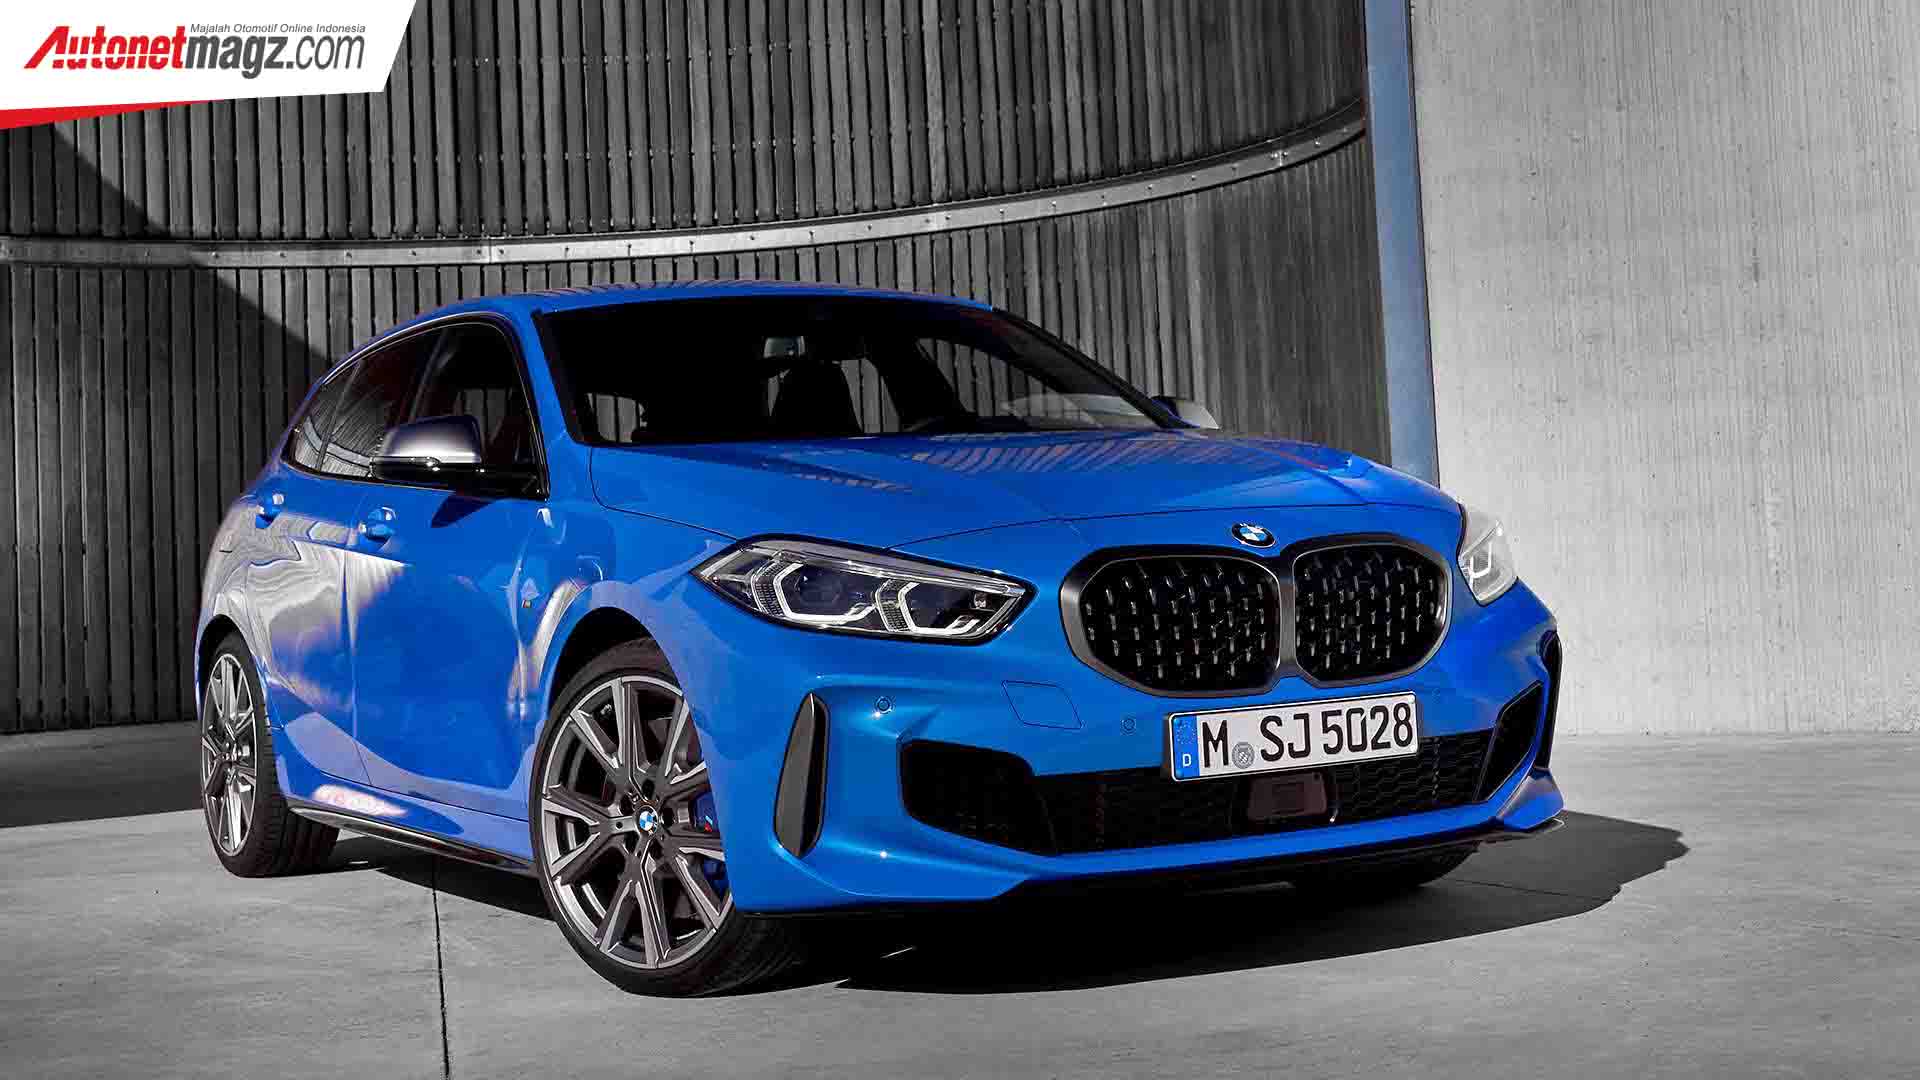 Berita, BMW M135i xDrive depan: BMW 1-Series 2020 Diperkenalkan, Versi Hatchback BMW X2?